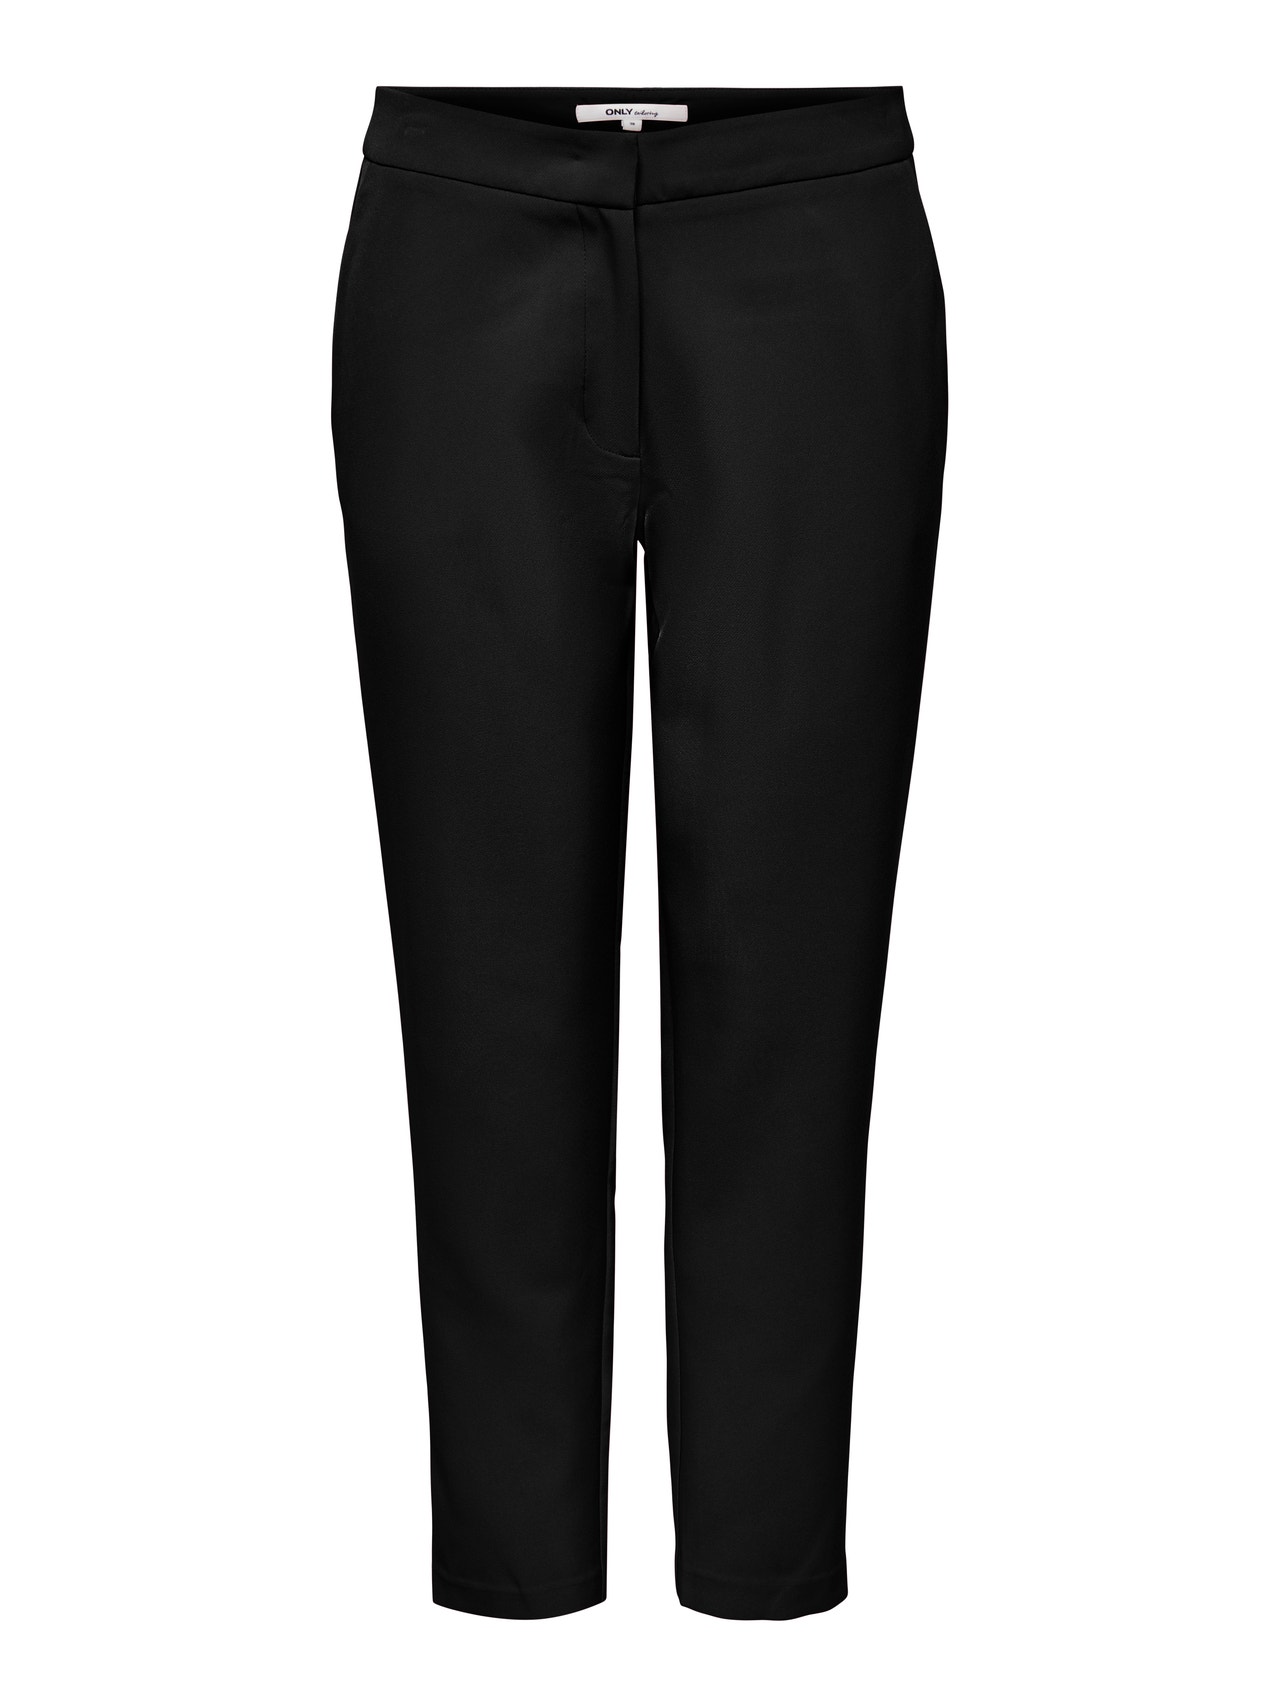 Pantalons Regular Fit Taille moyenne, Black